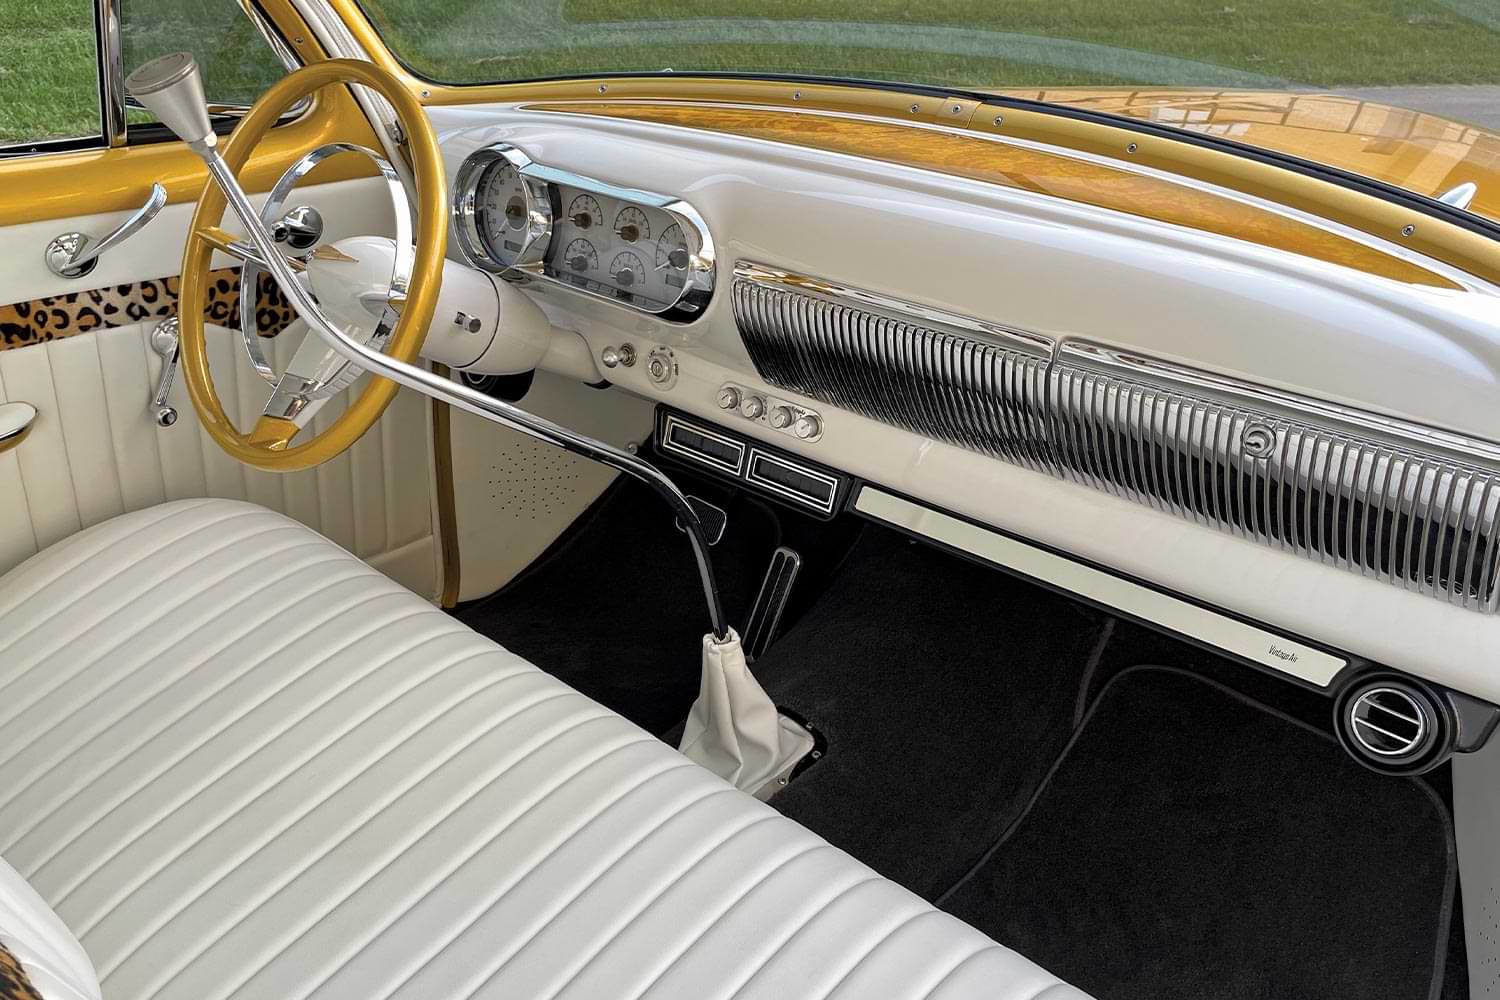 the custom ’54 Chevy Bel Air's dashboard